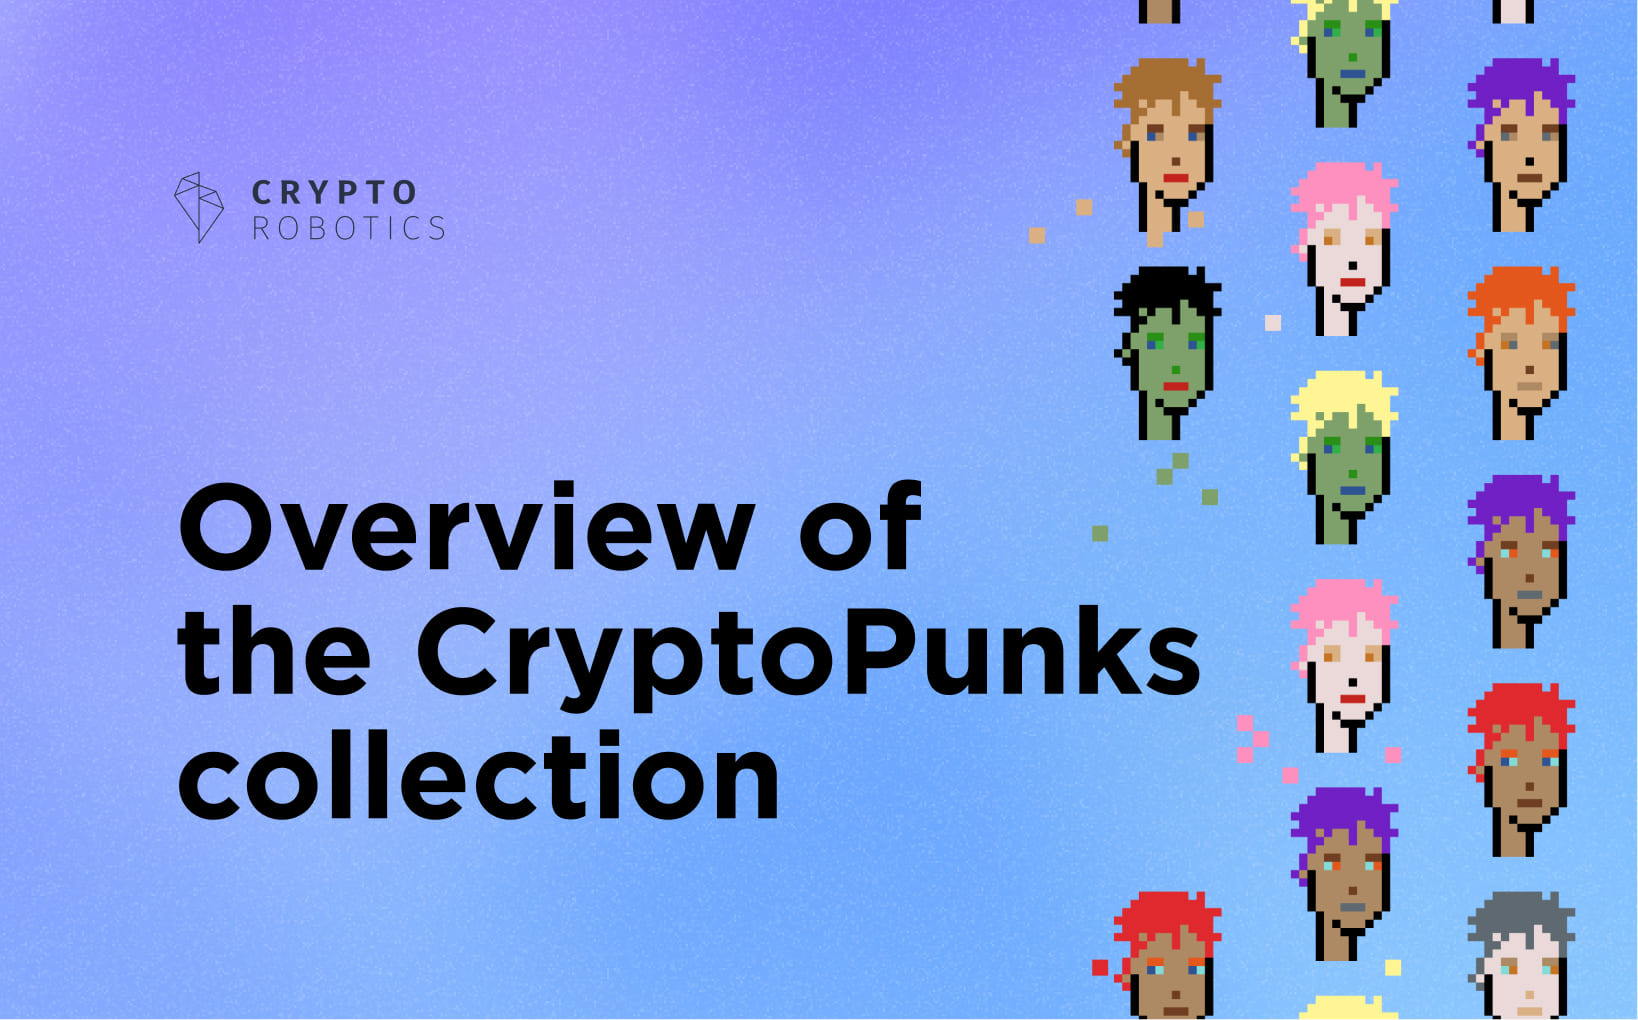 Cryptopunks collection